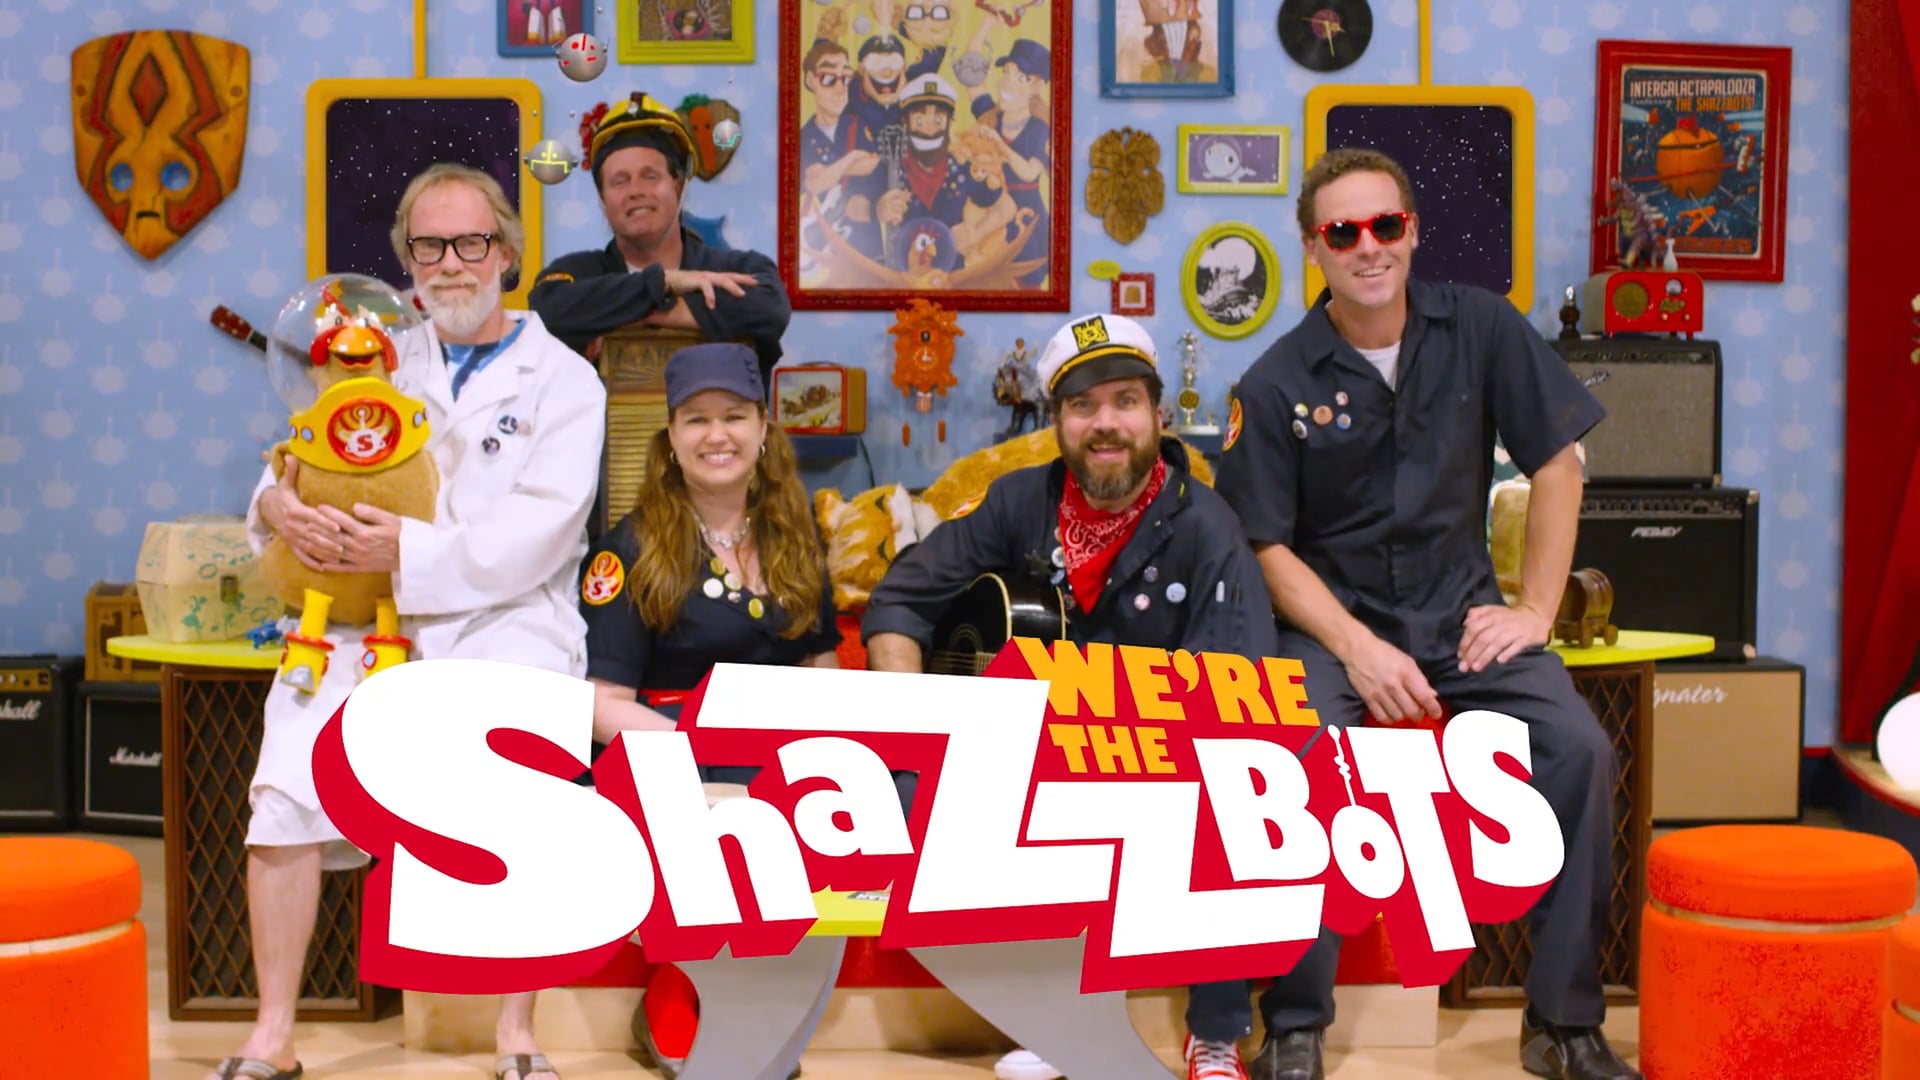 We're The Shazzbots 90sec trailer